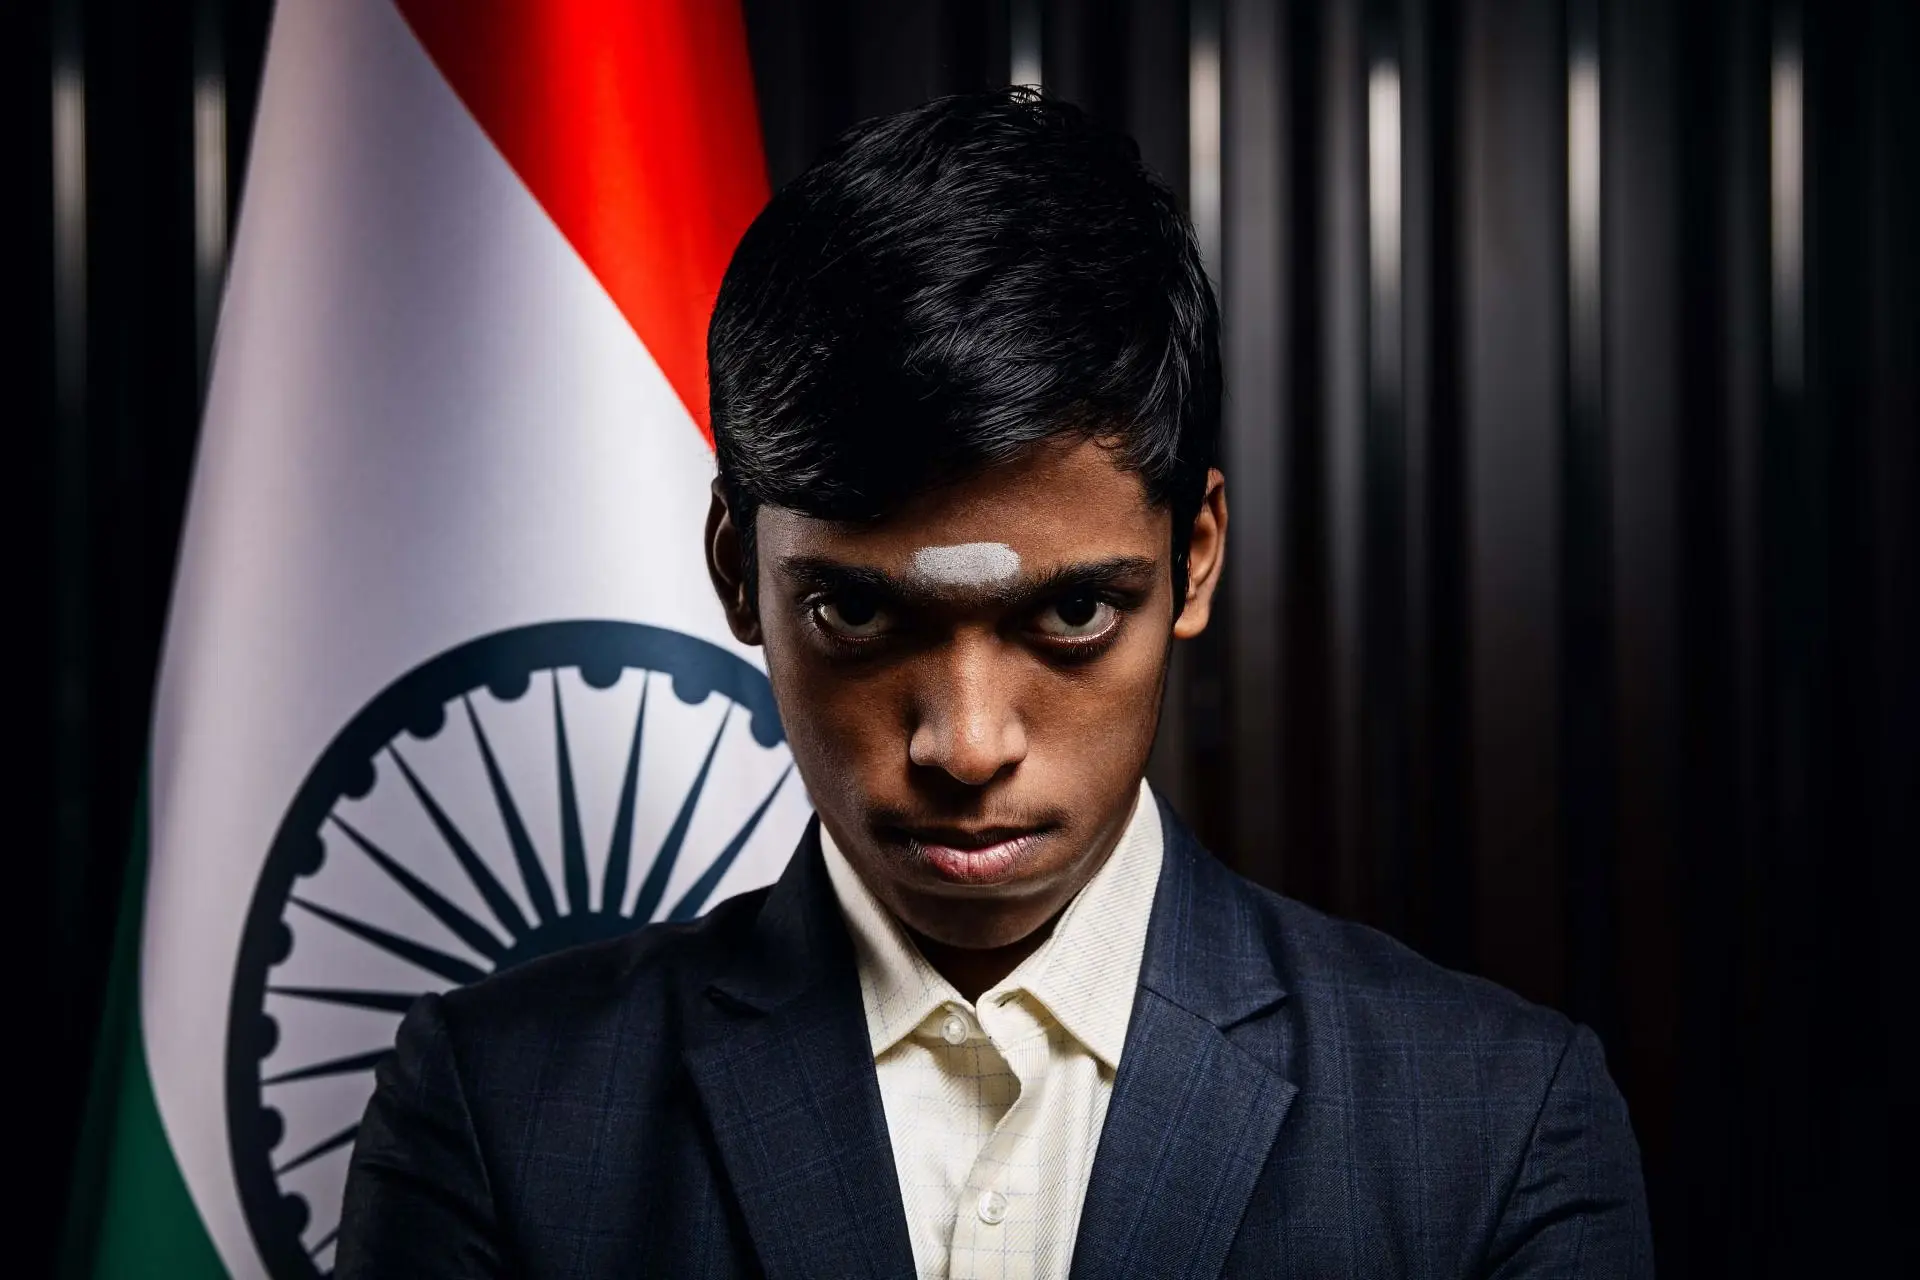 Rameshbabu Praggnanandhaa: The 16-year-old Indian chess sensation